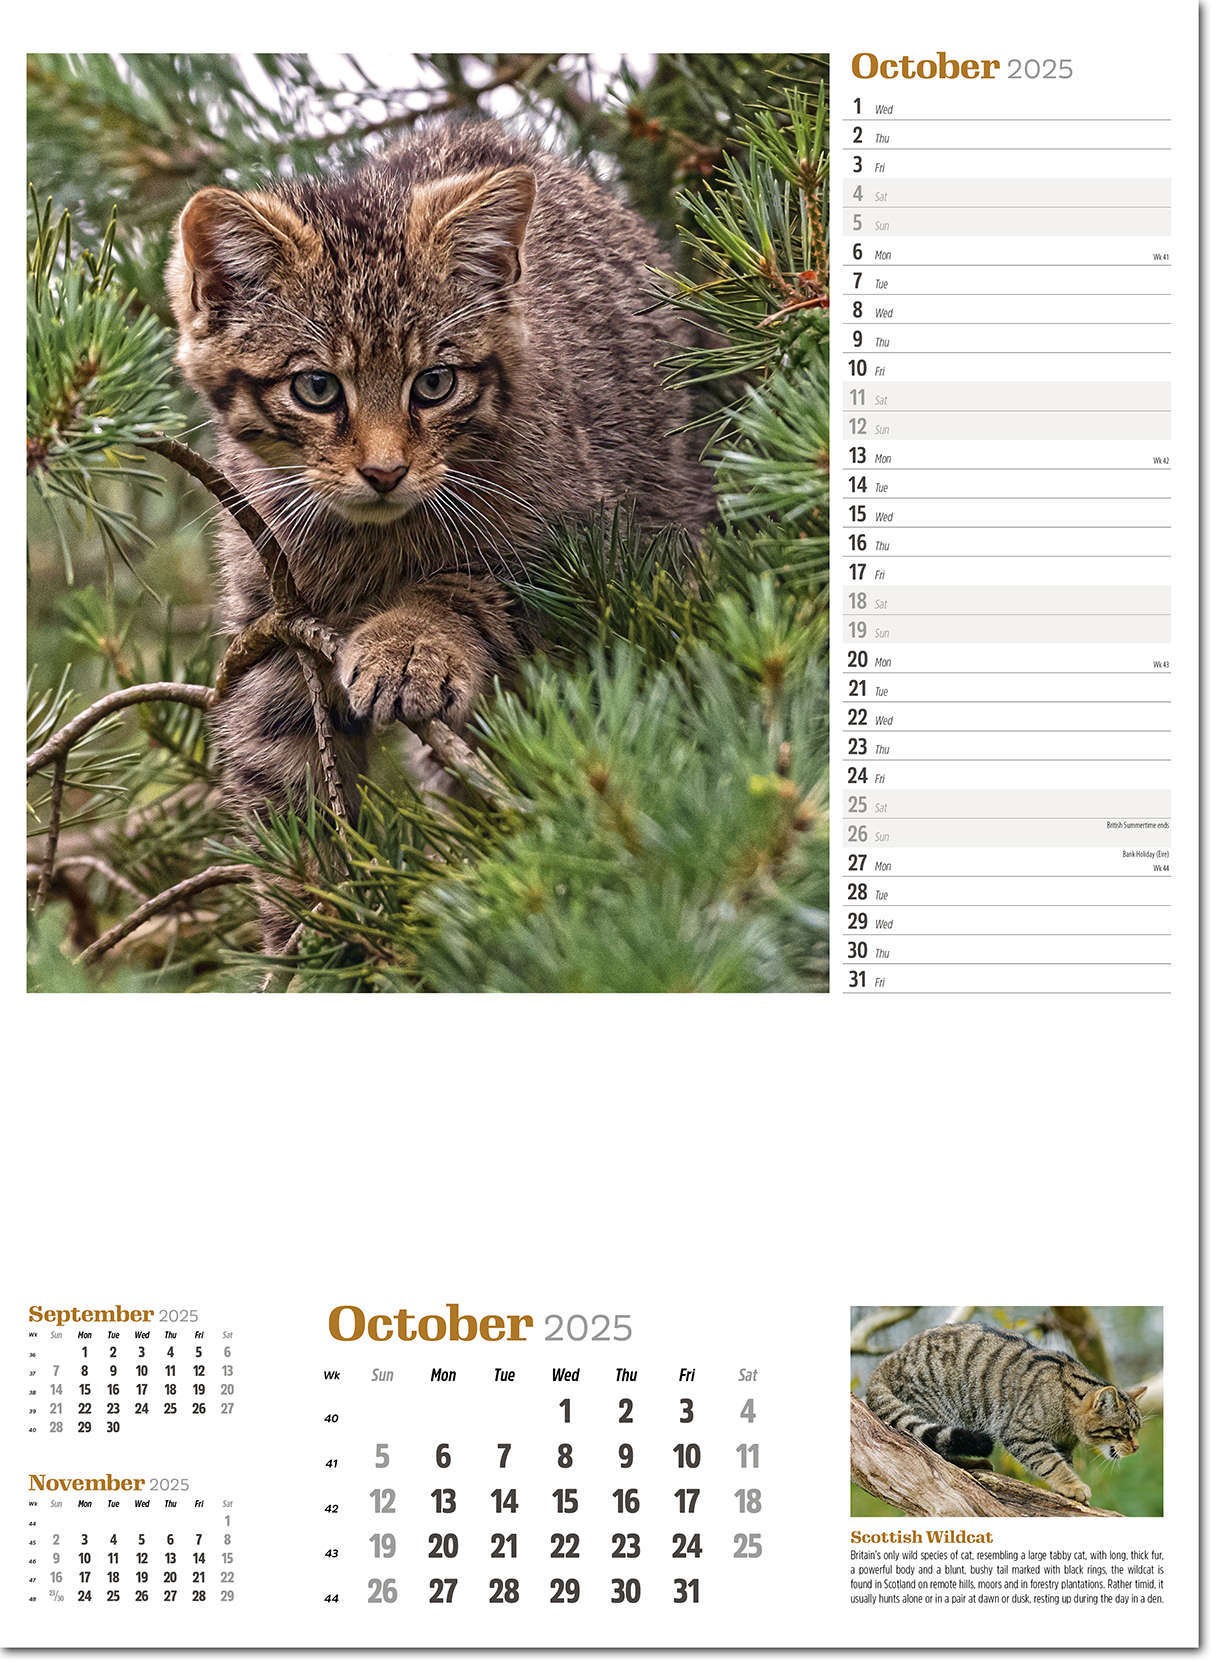 Wildlife in Britain Wall Calendar